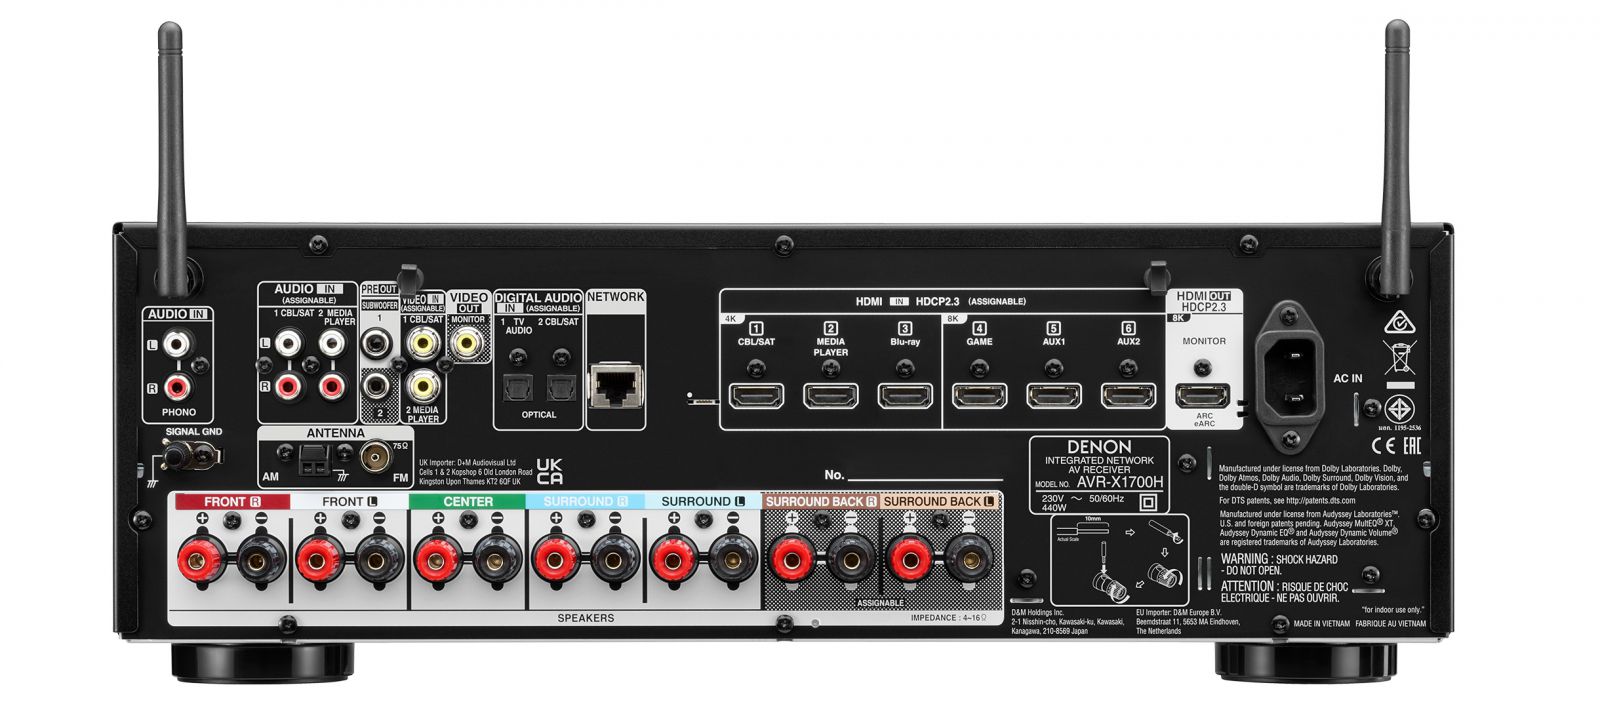 Ampli Receiver Denon AVR-X1700H | Anh Duy Audio